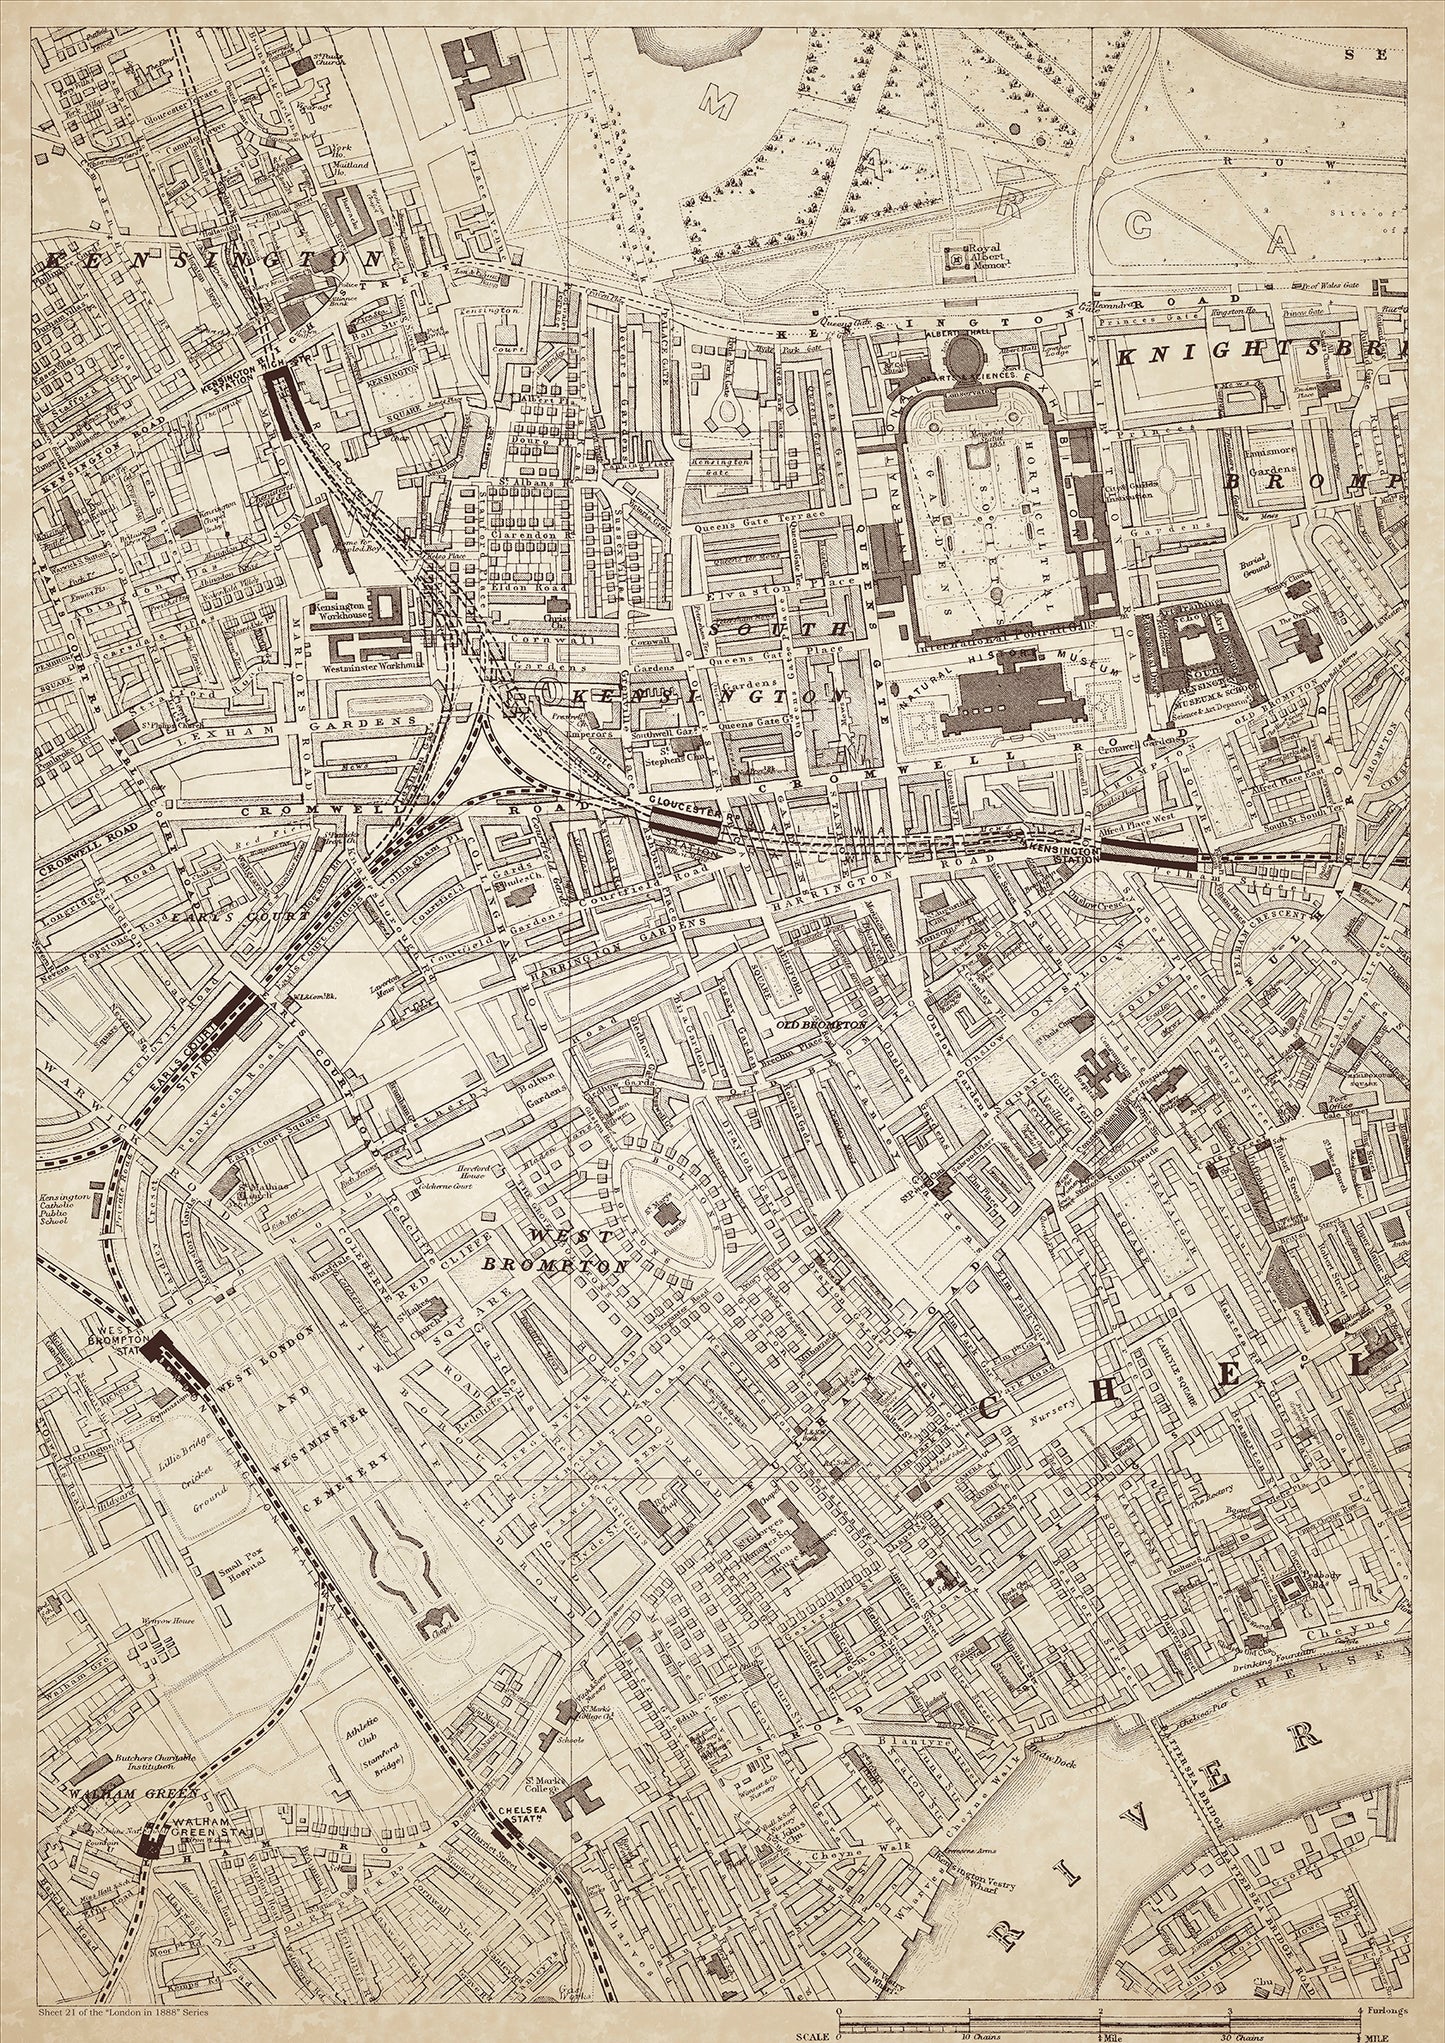 London in 1888 Series - showing Kensington, Knightsbridge, West Brompton, Chelsea, Brompton (west), Earl's Court - sheet 21